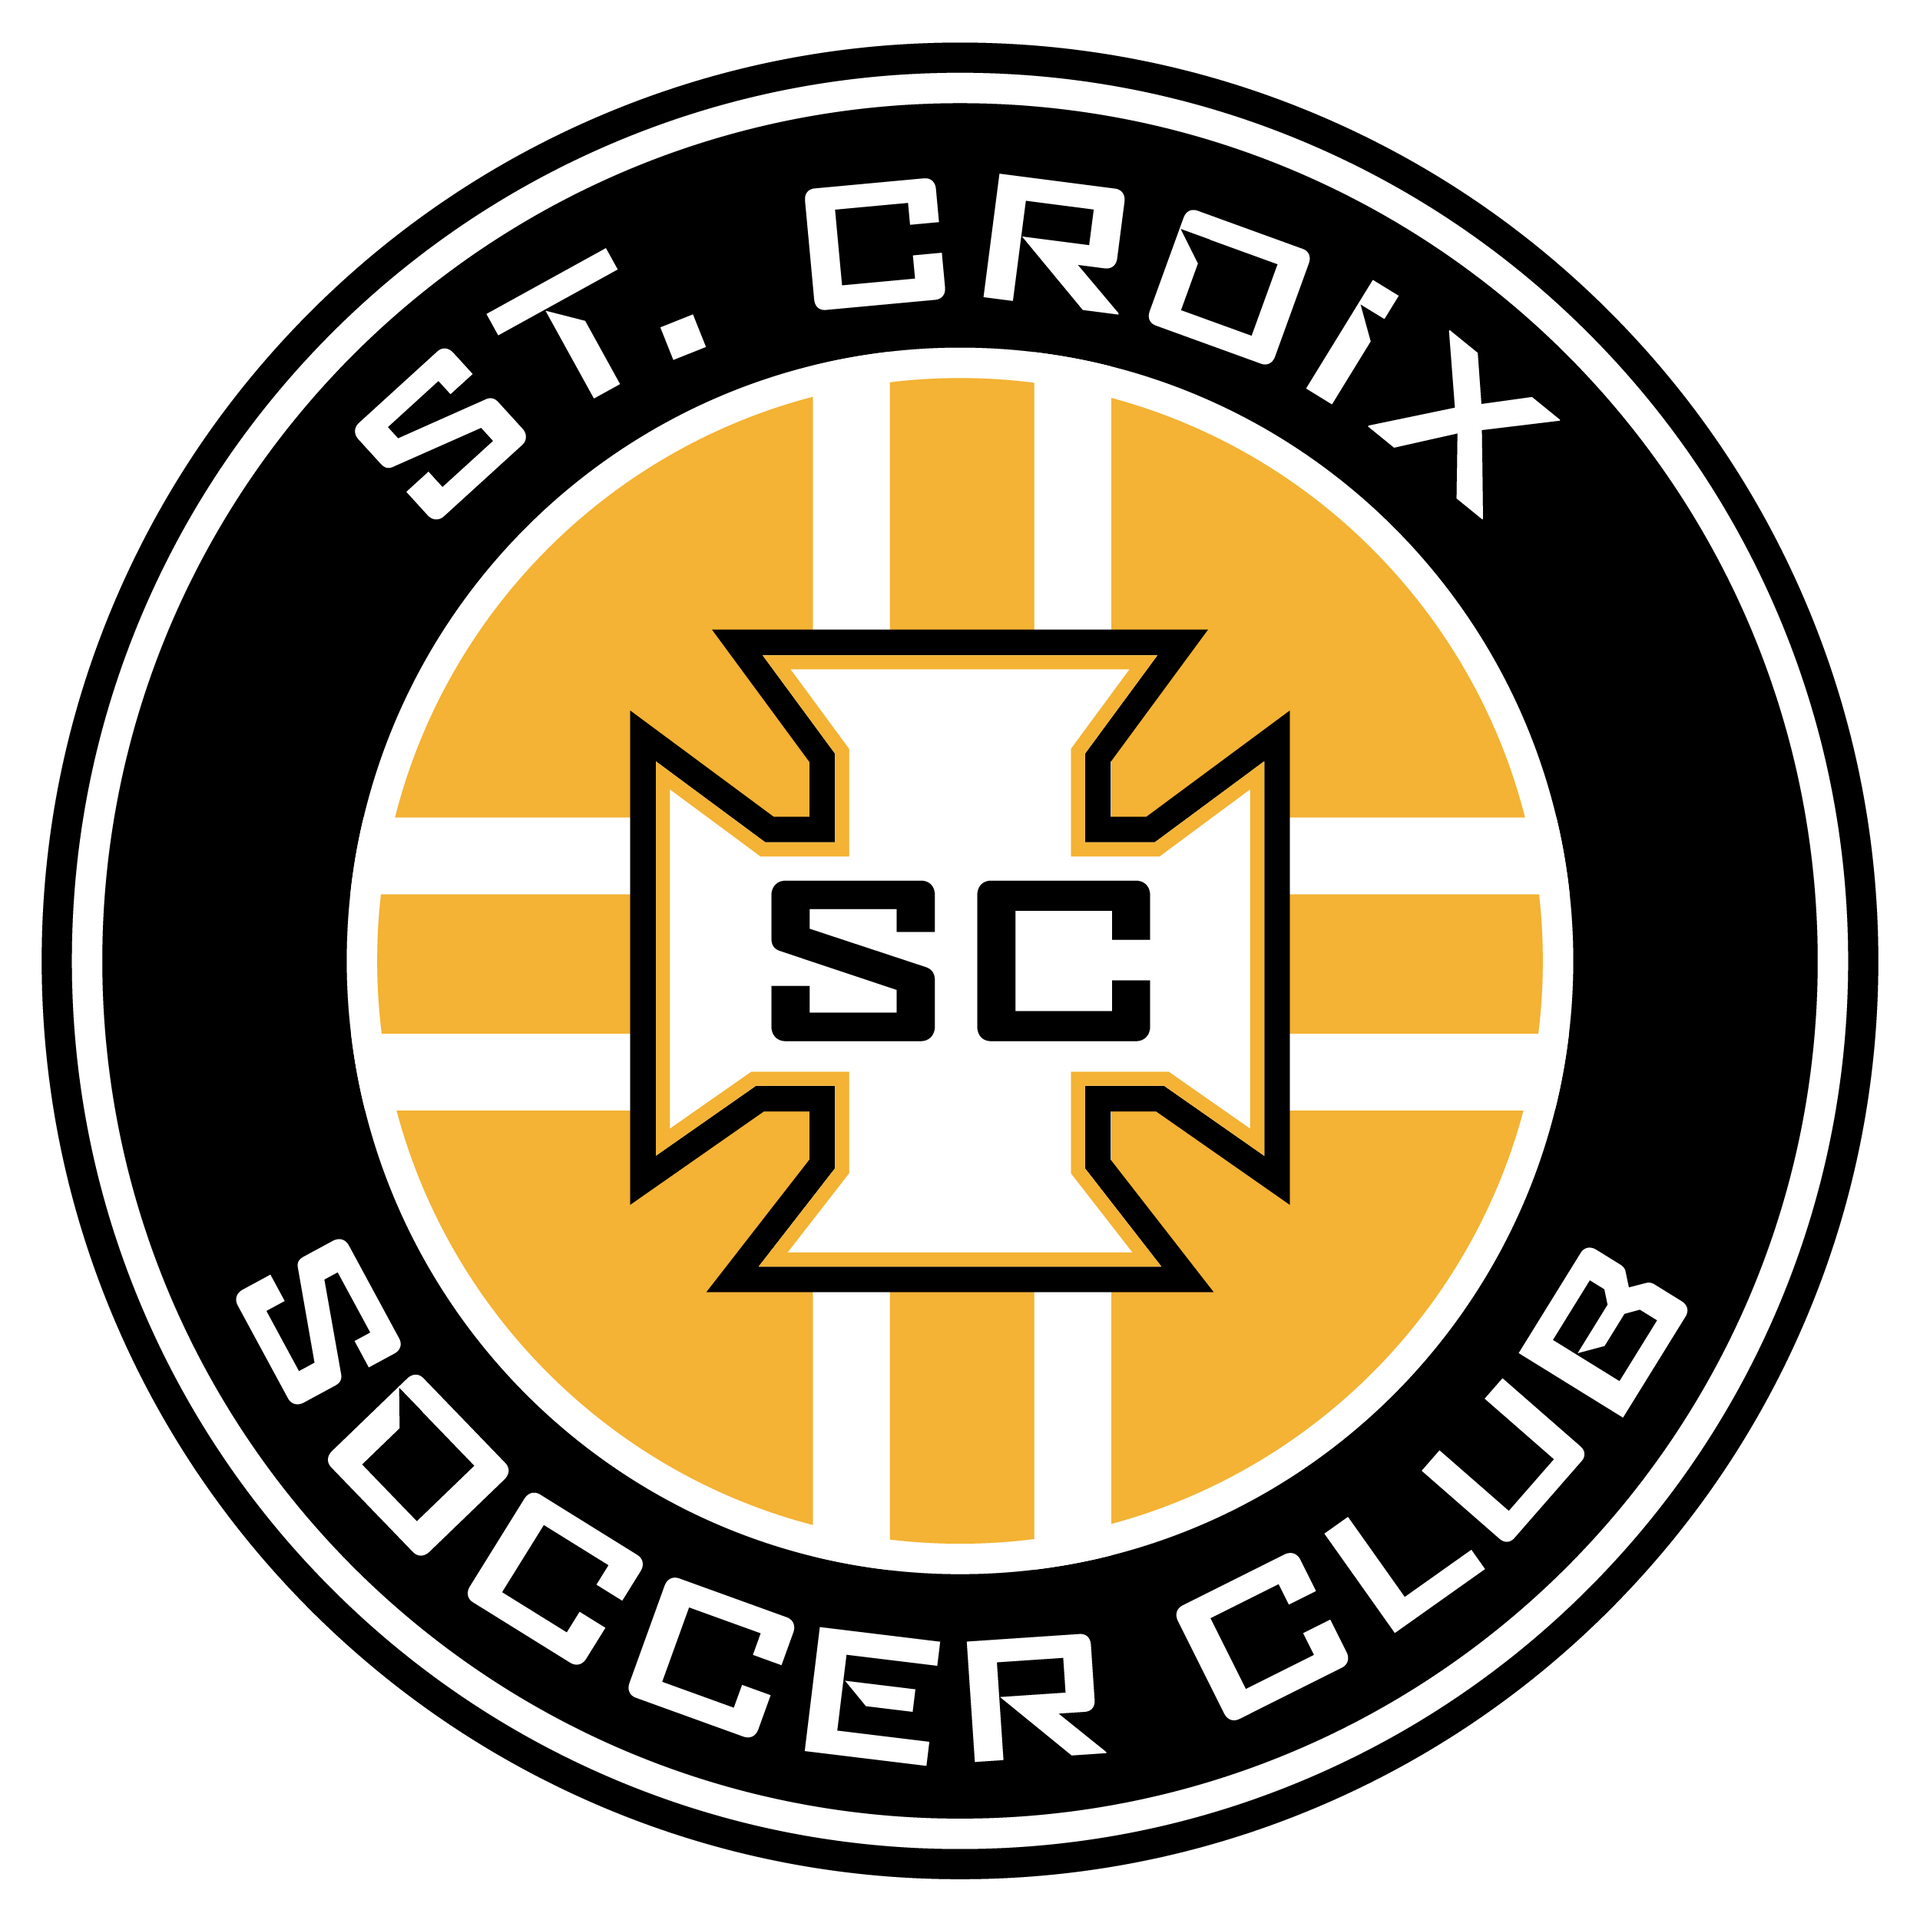 St. Croix Soccer Club